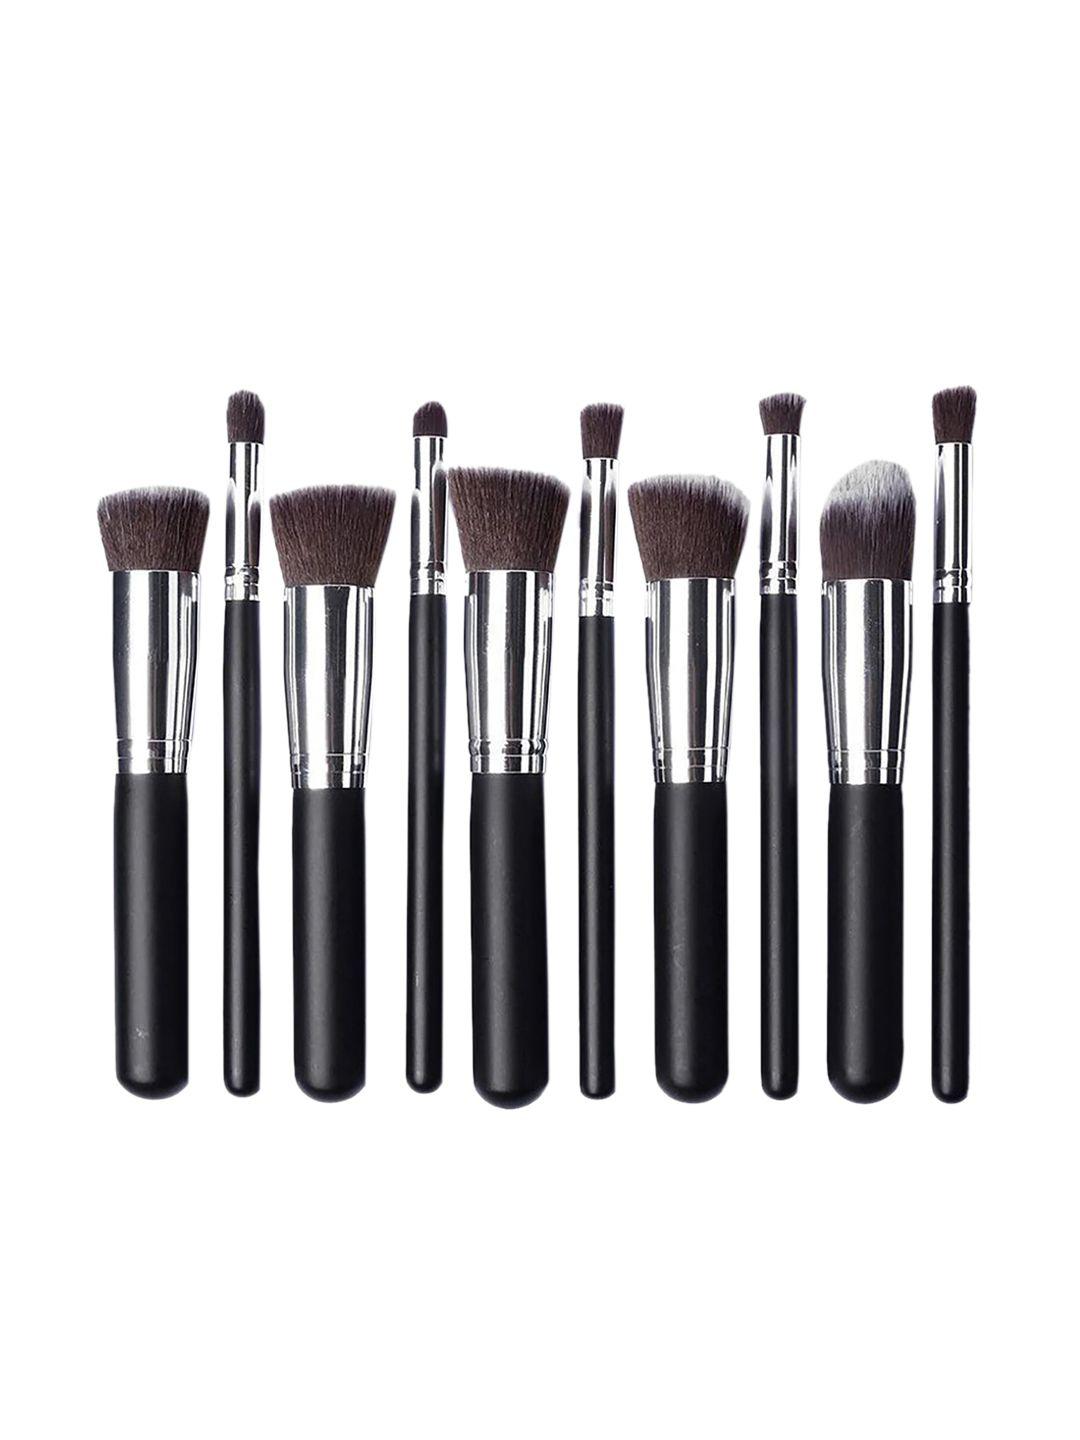 ronzille set of 10 makeup brushes - black